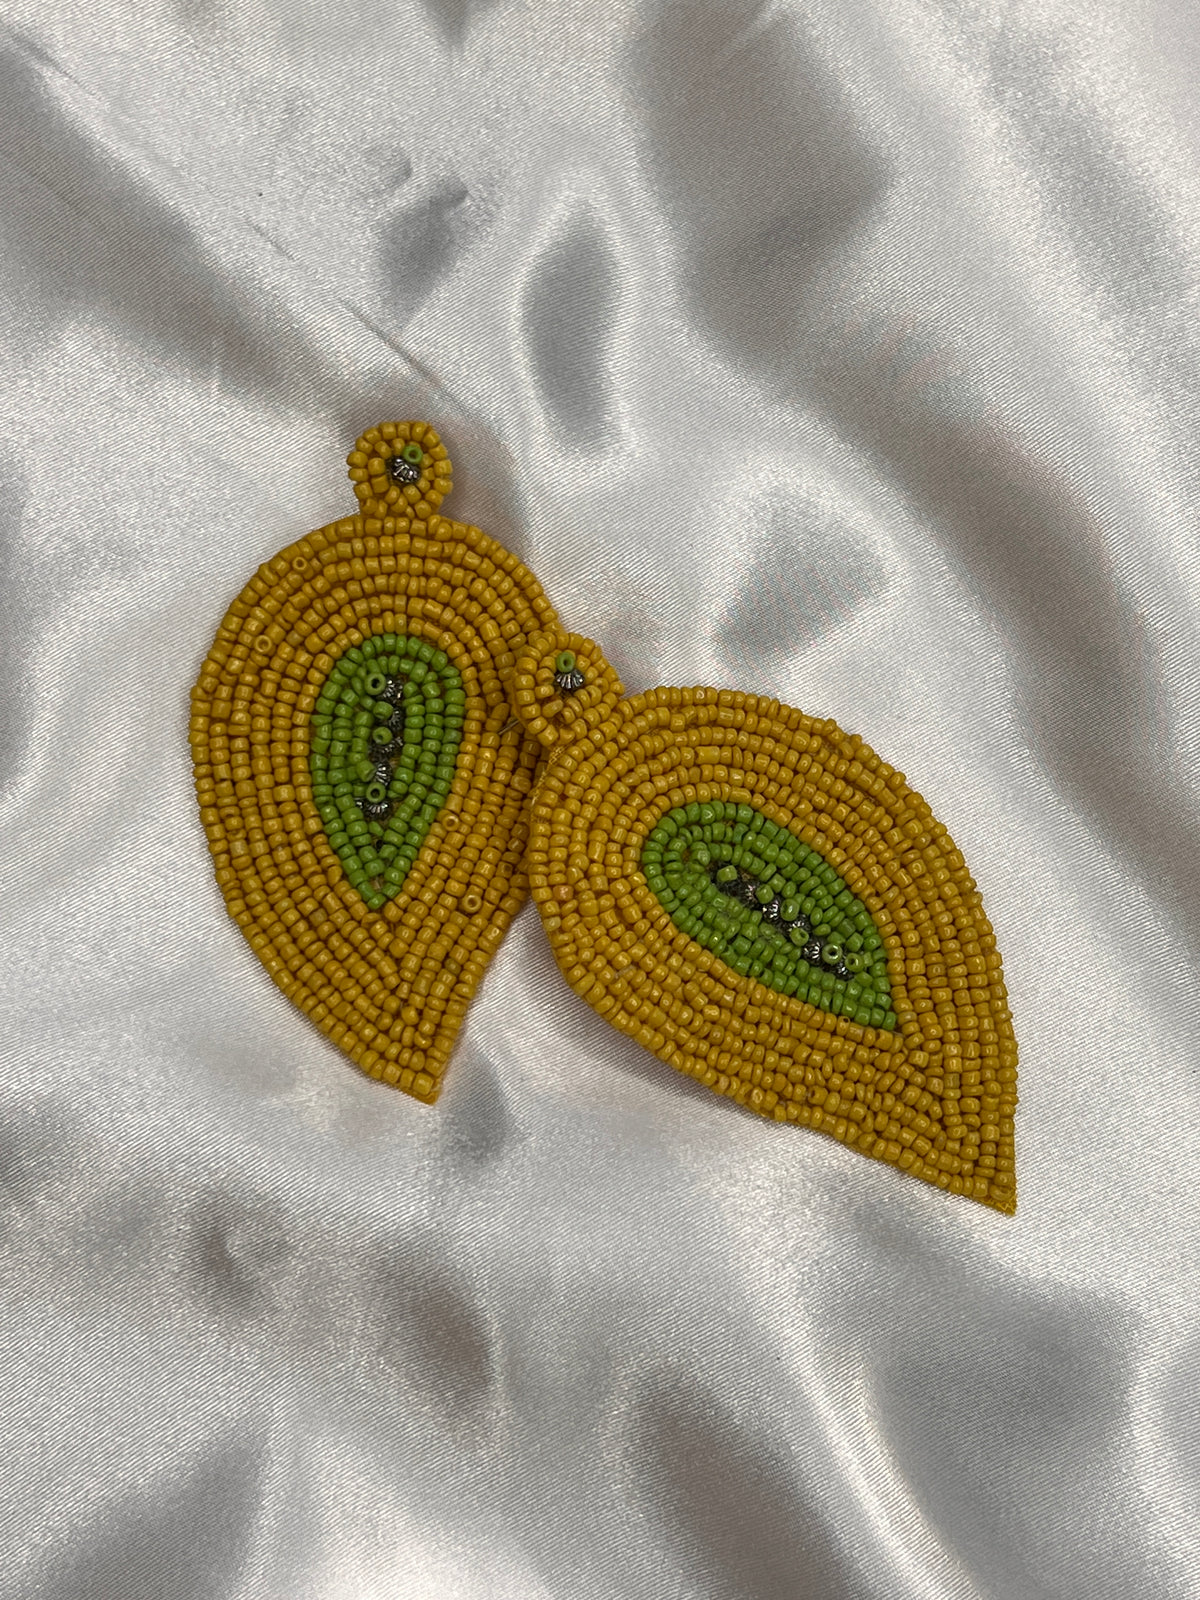 Beaded Dangle Earrings